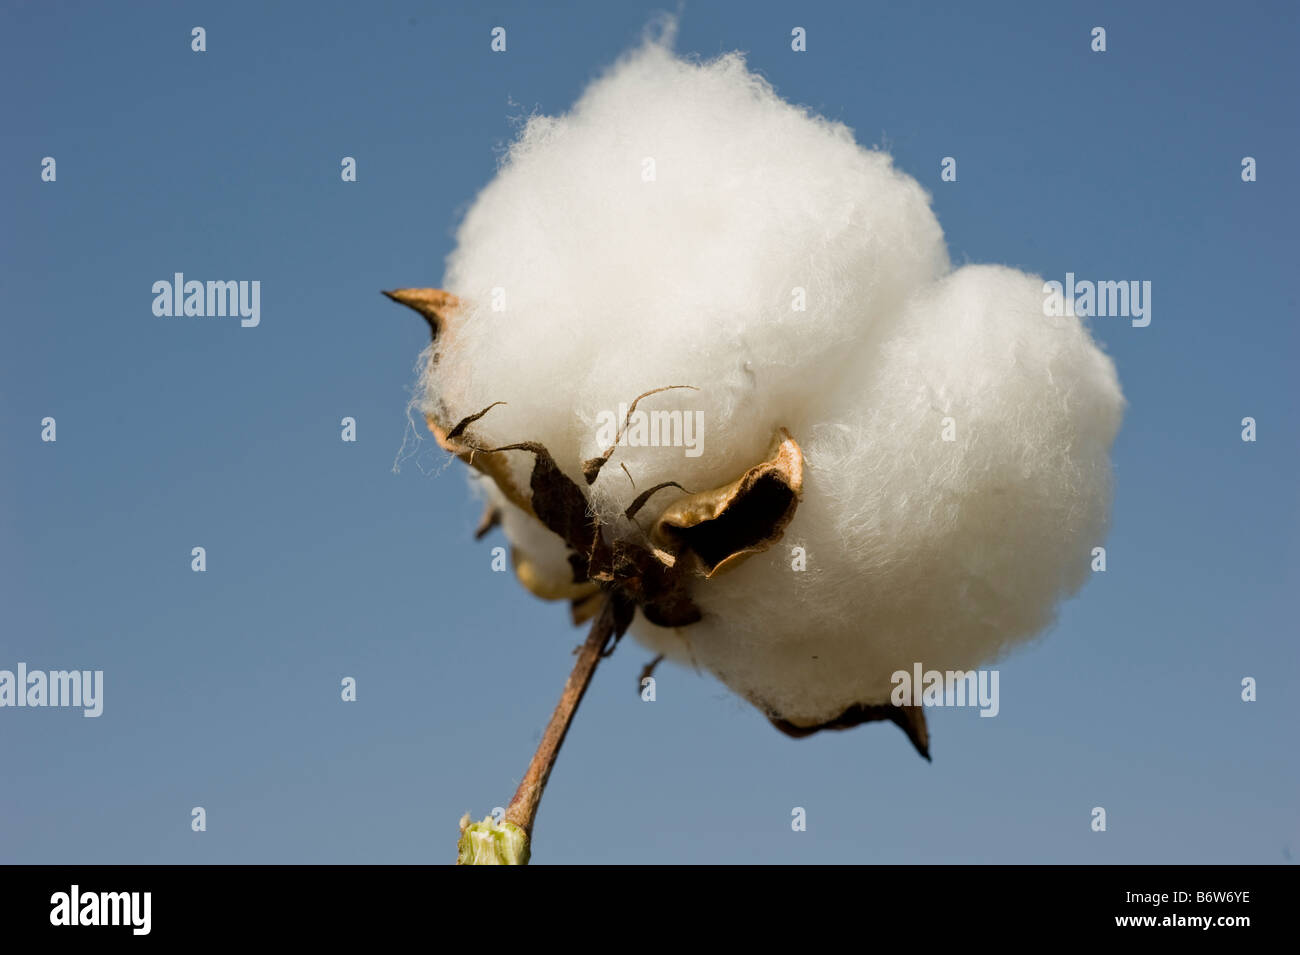 India M.P. Khargone , fair trade and organic cotton farming Stock Photo